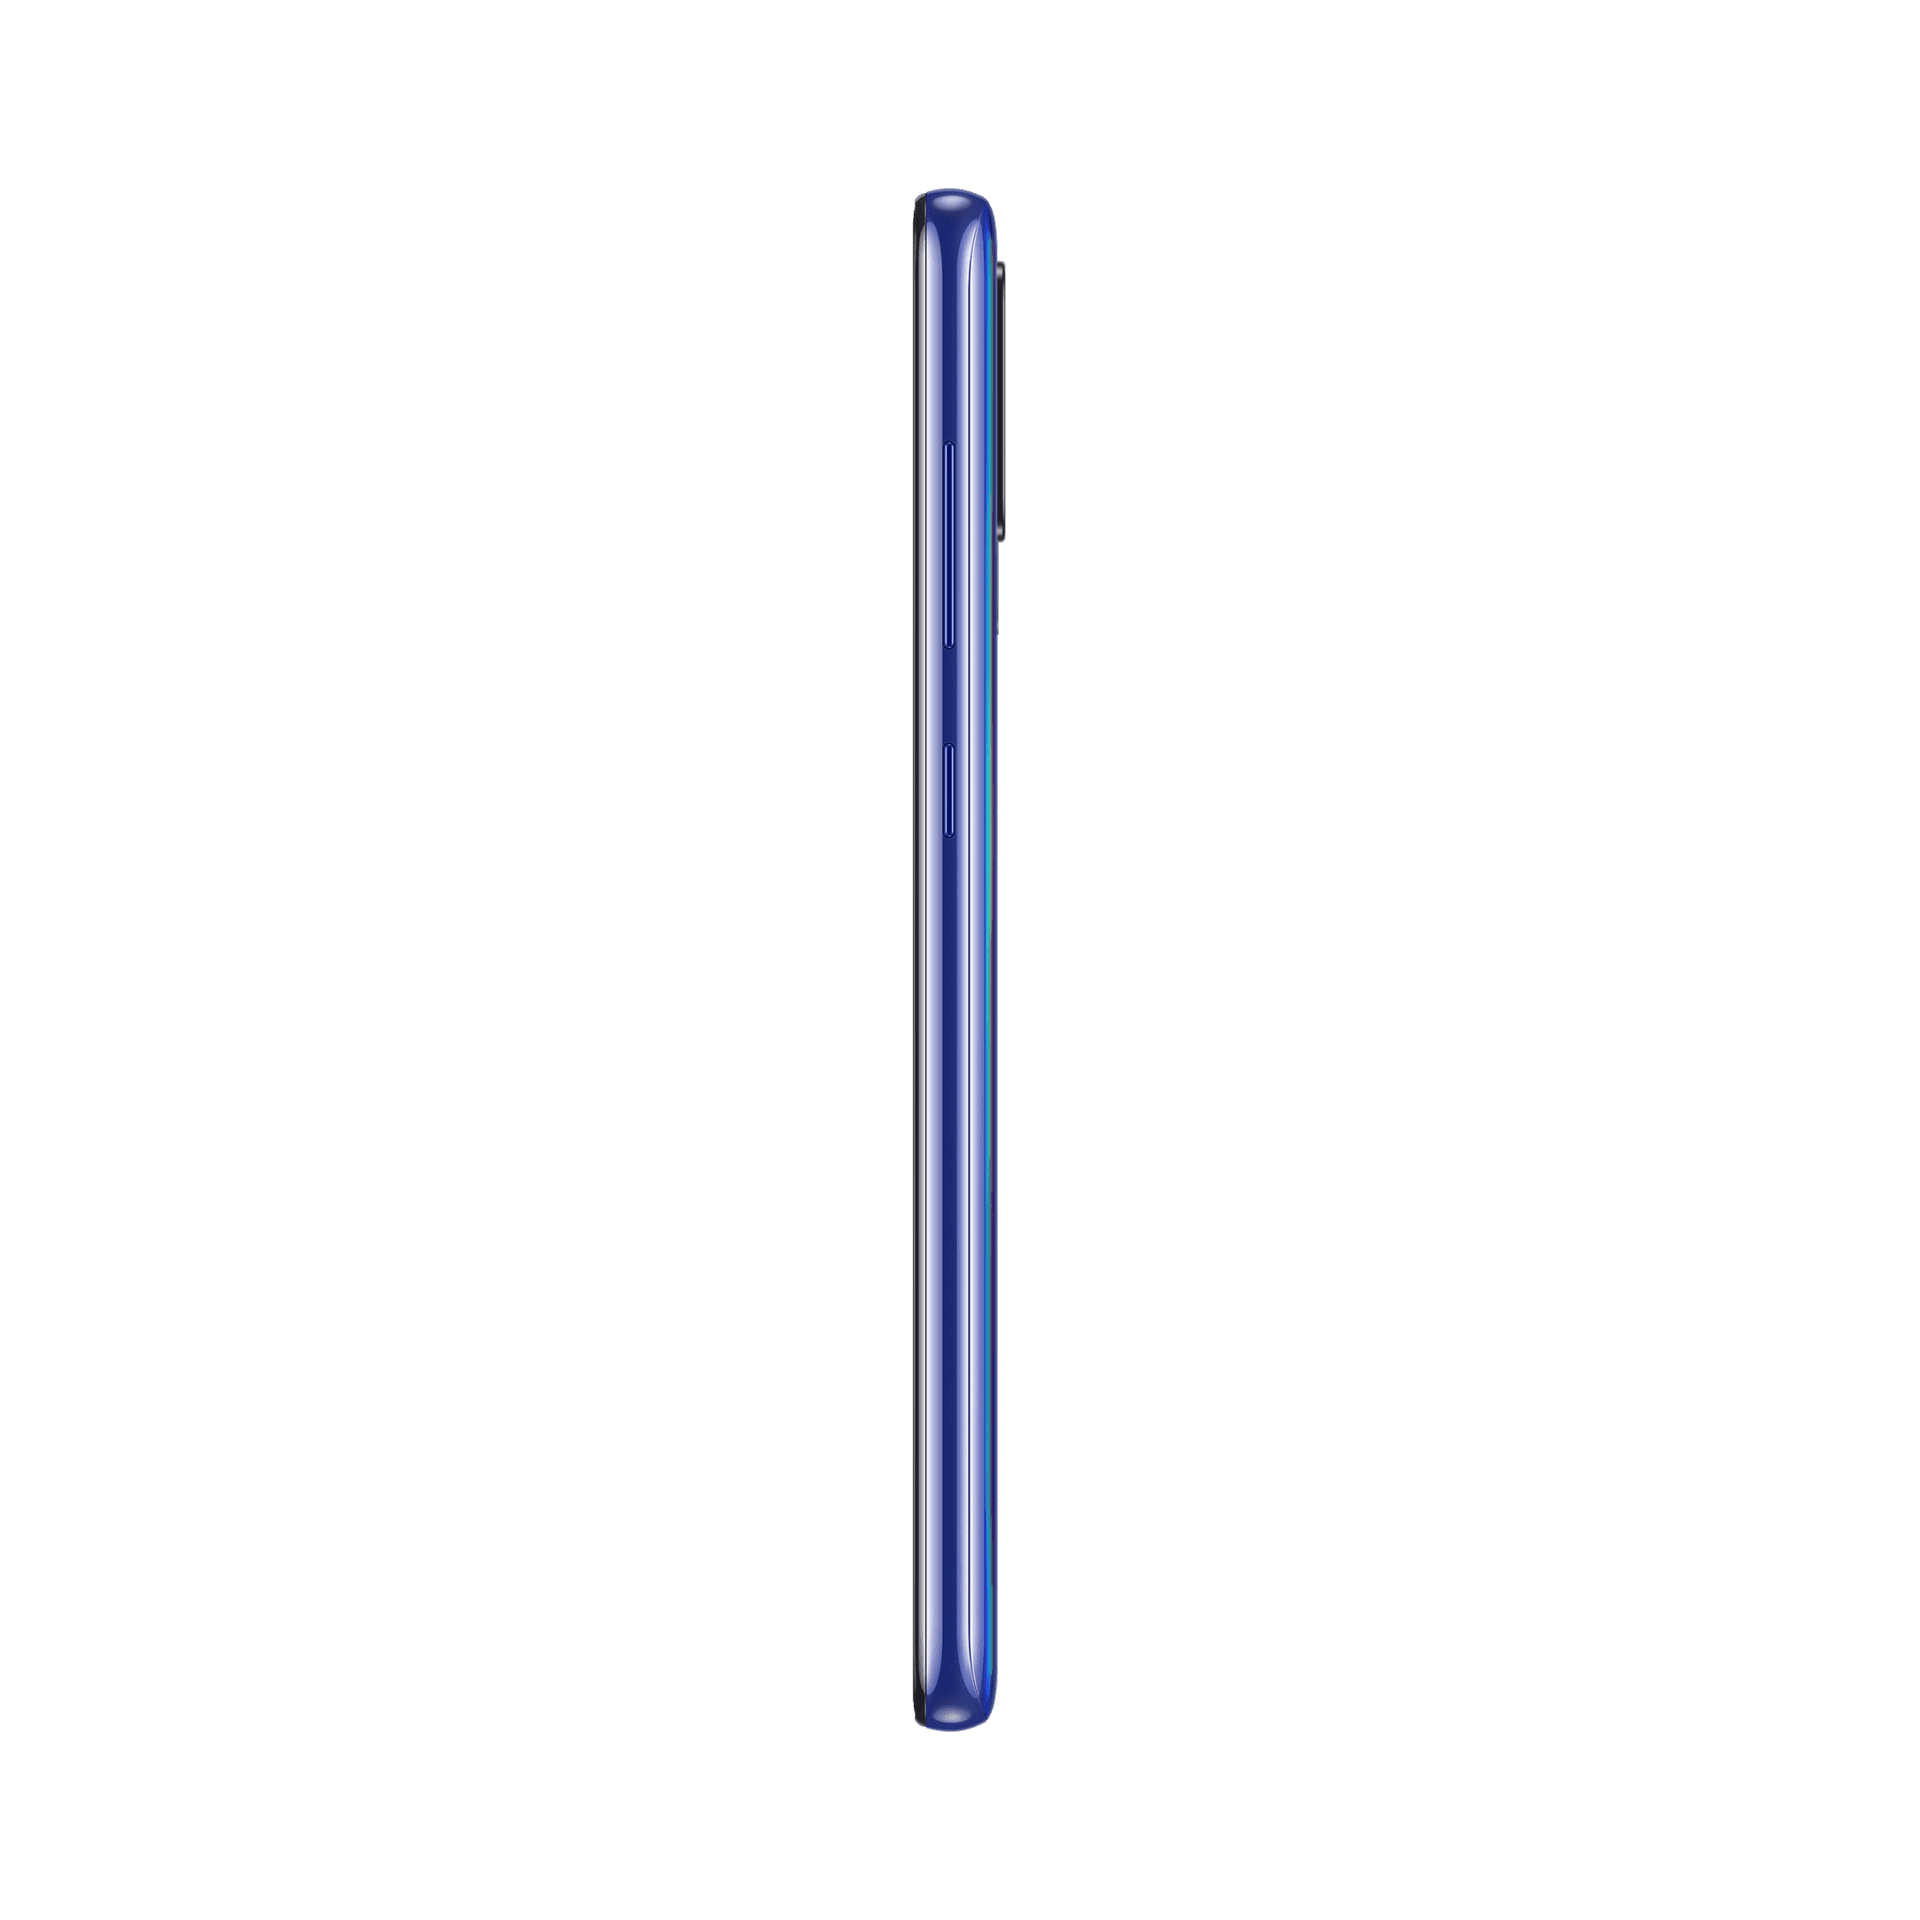 Samsung Galaxy A21s - 64 GB - Mavi